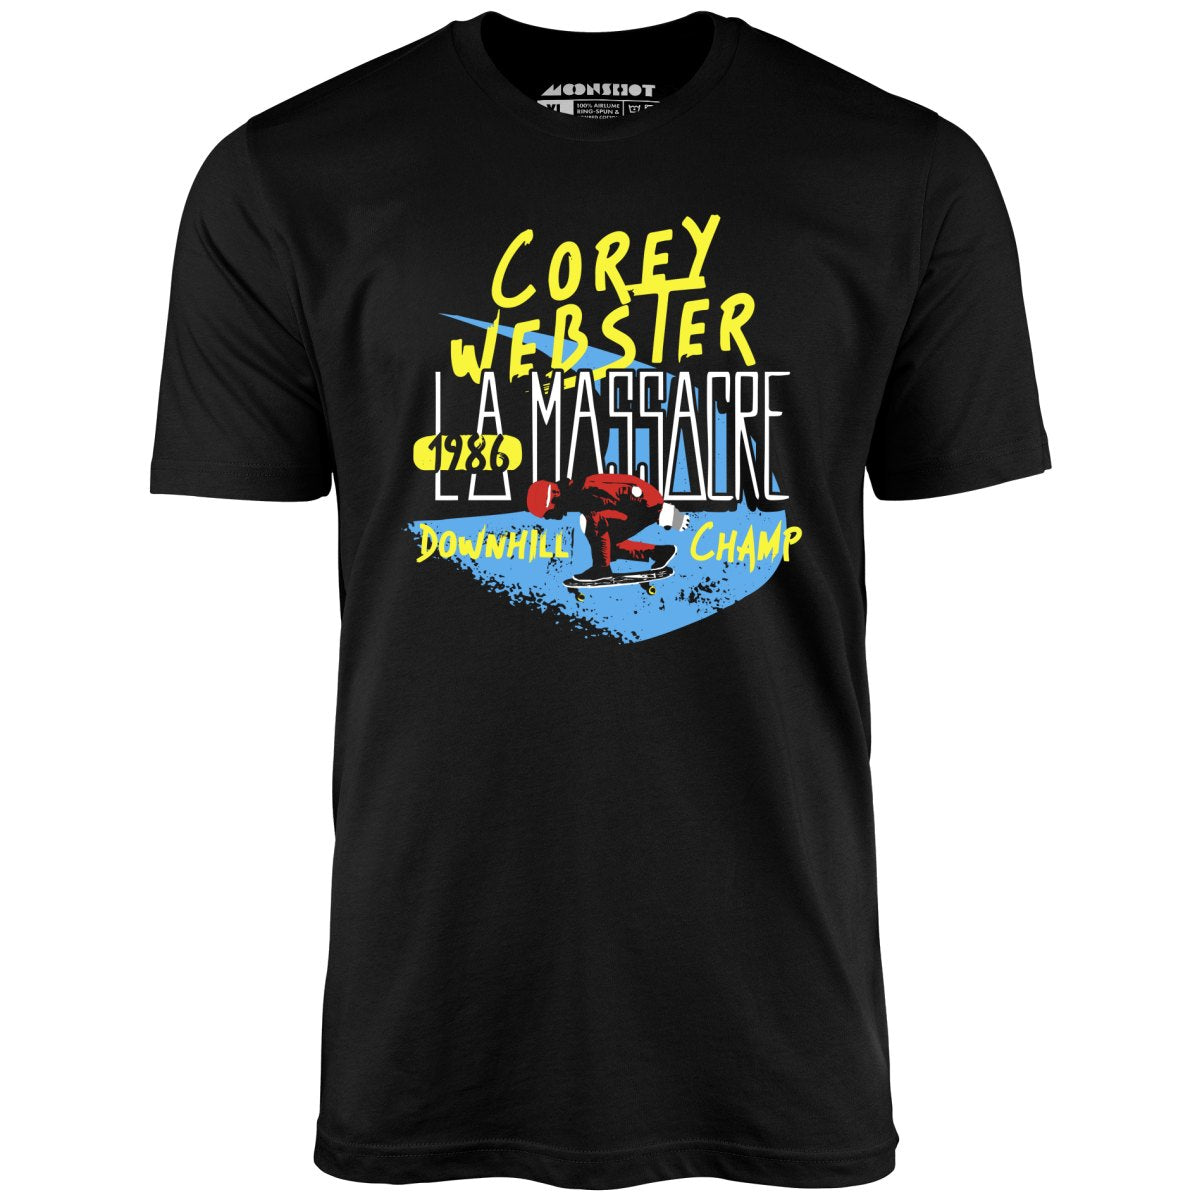 Corey Webster 1986 LA Massacre Downhill Champ - Unisex T-Shirt